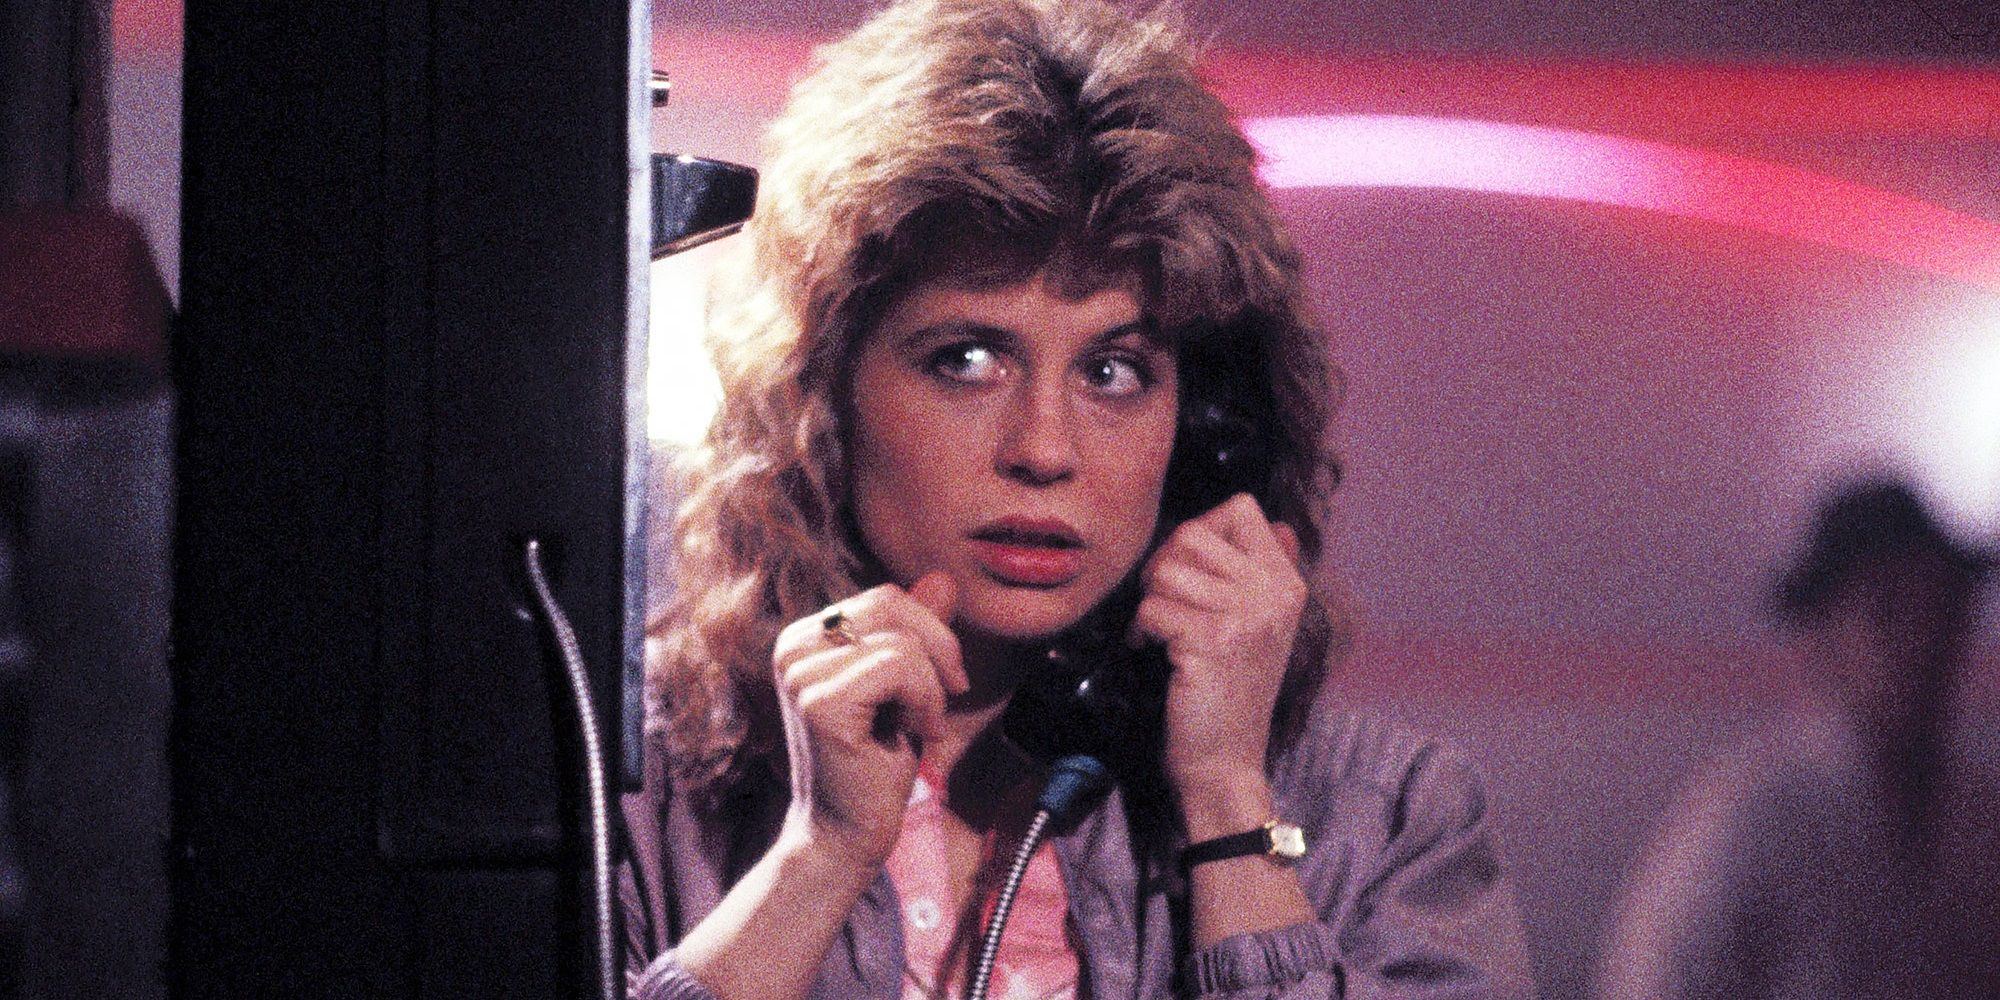 Linda Hamilton as Sarah Connor in The Terminator